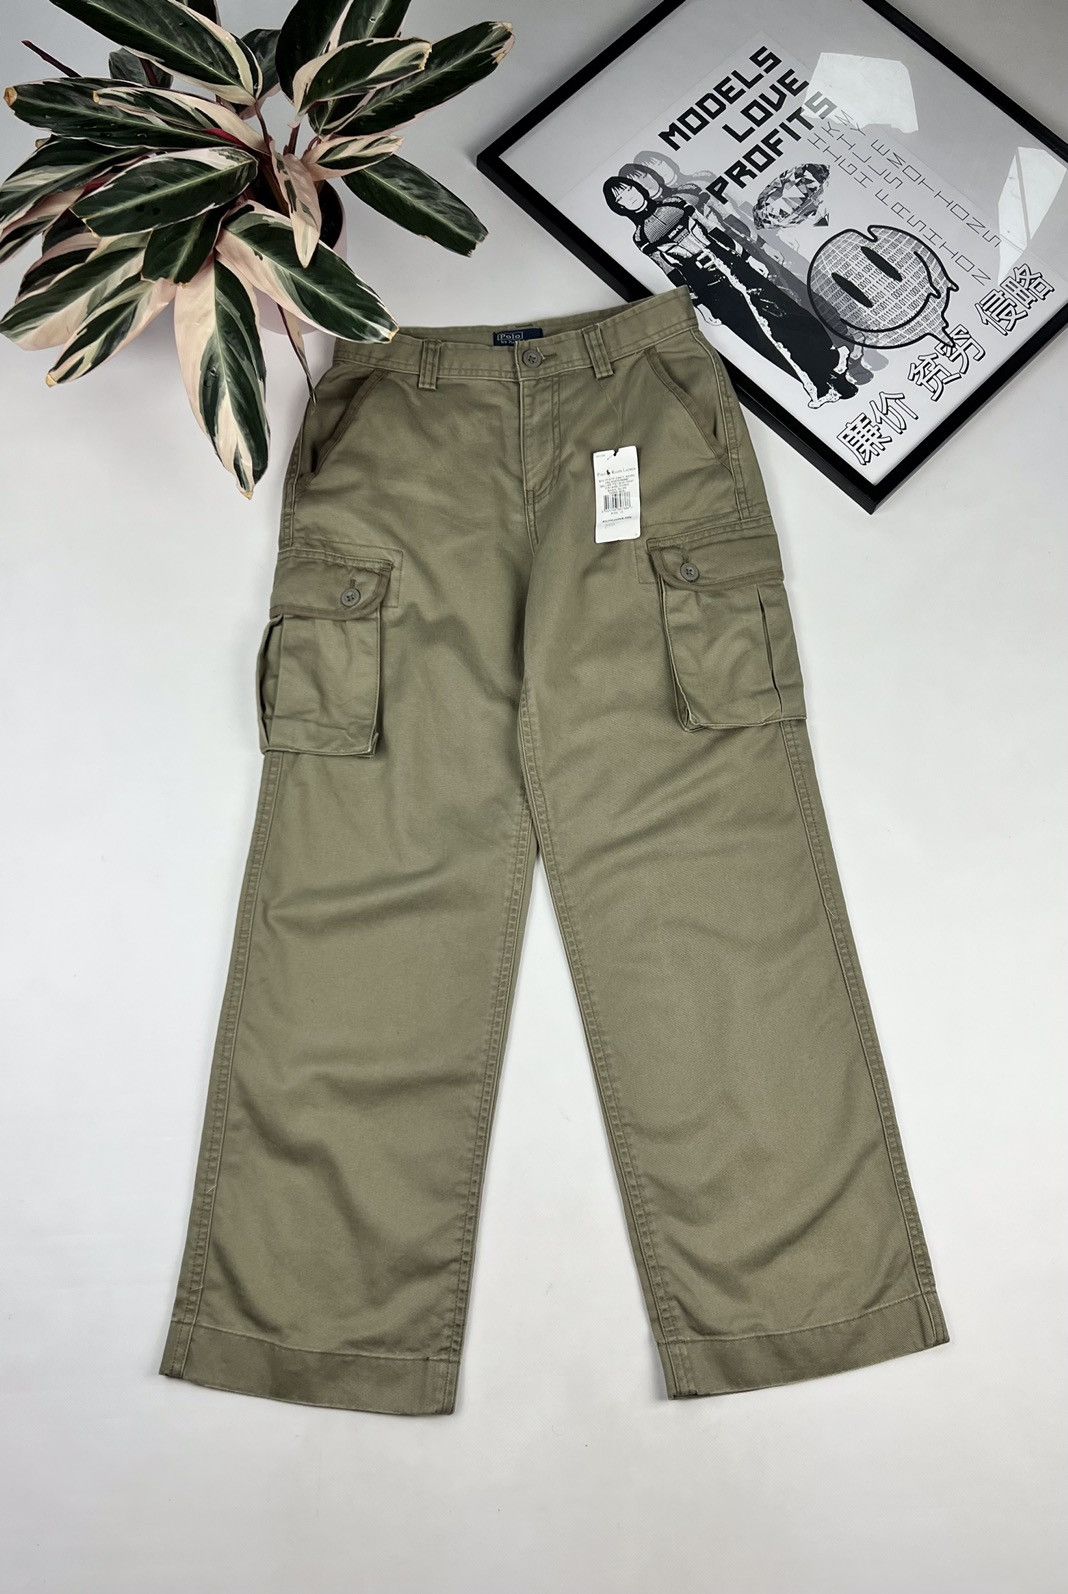 Polo Ralph Lauren Military Cargo Pants